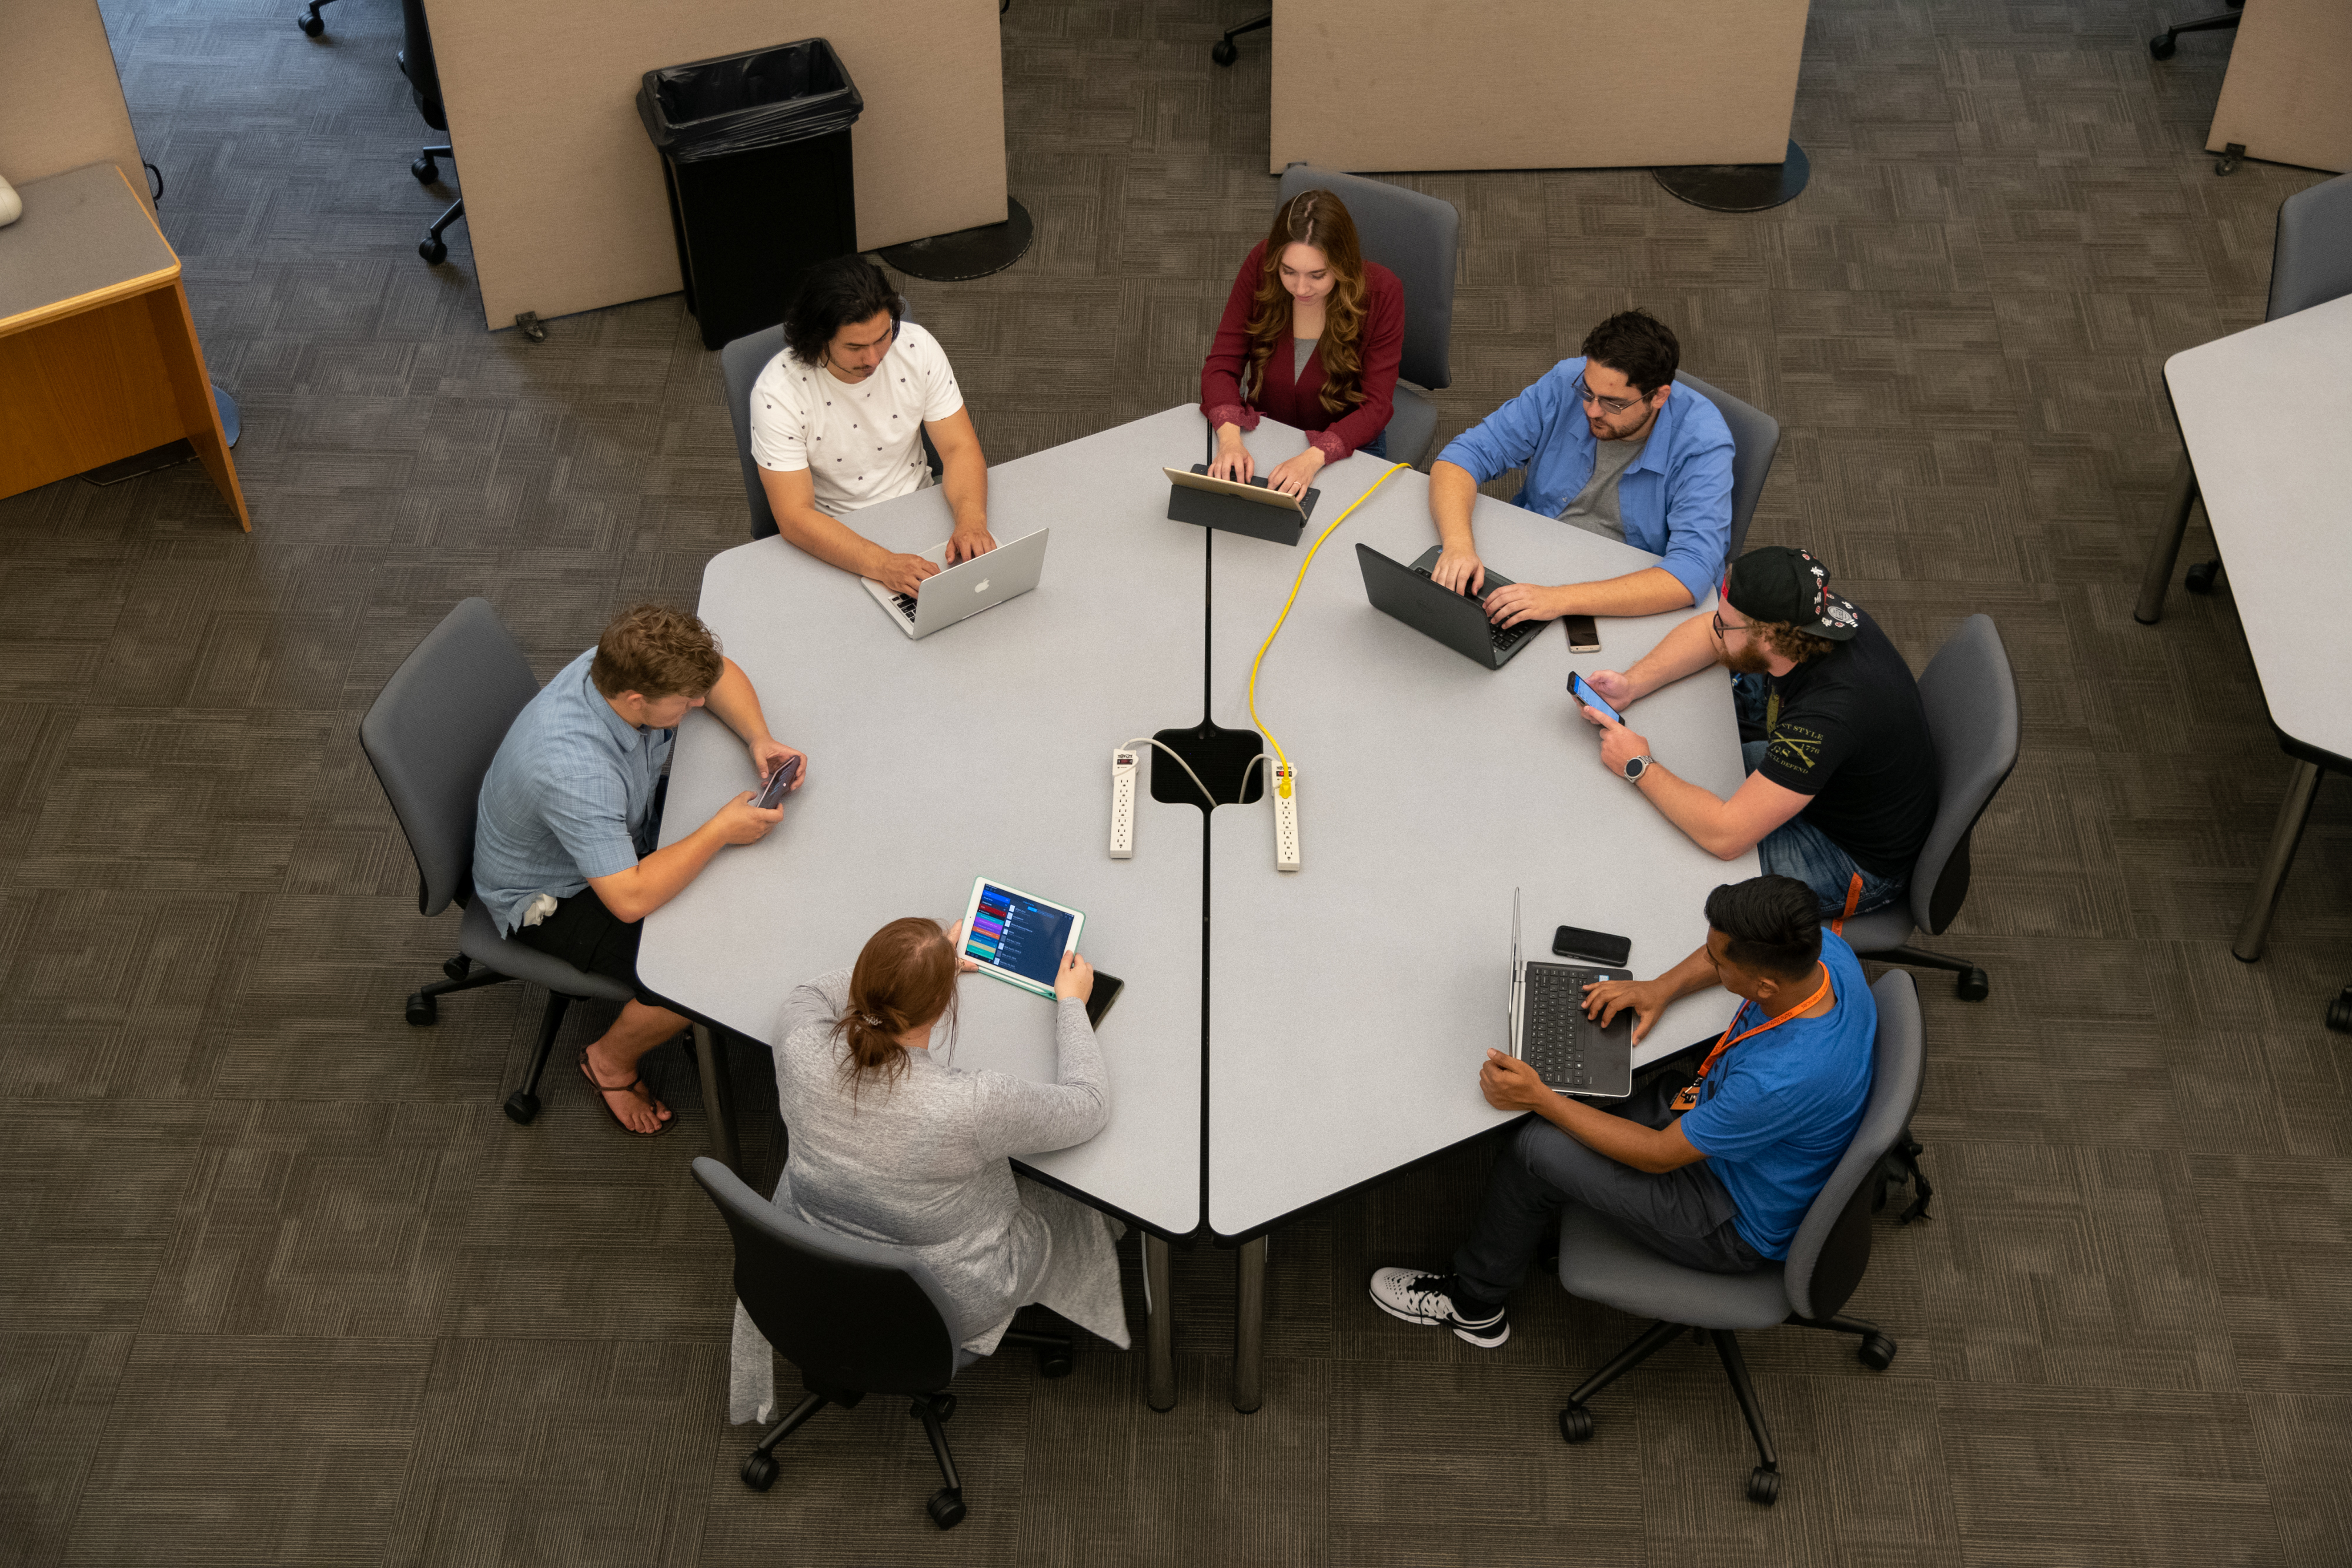 ISU Students meet around a table